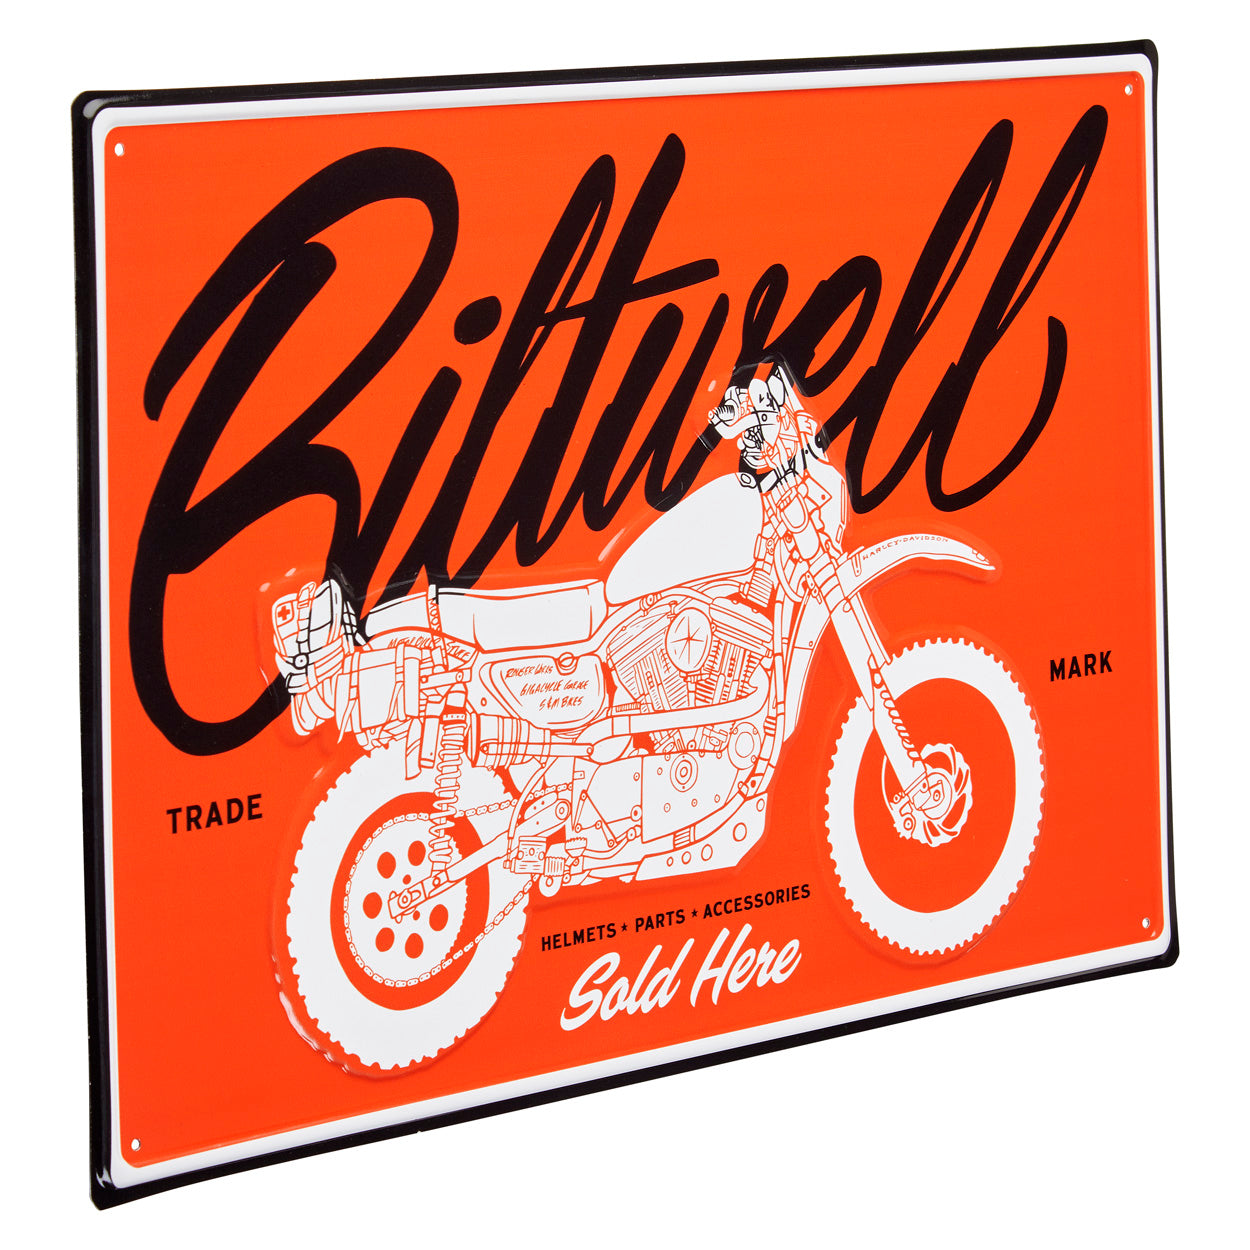 Biltwell Shop Sign - Sold Here